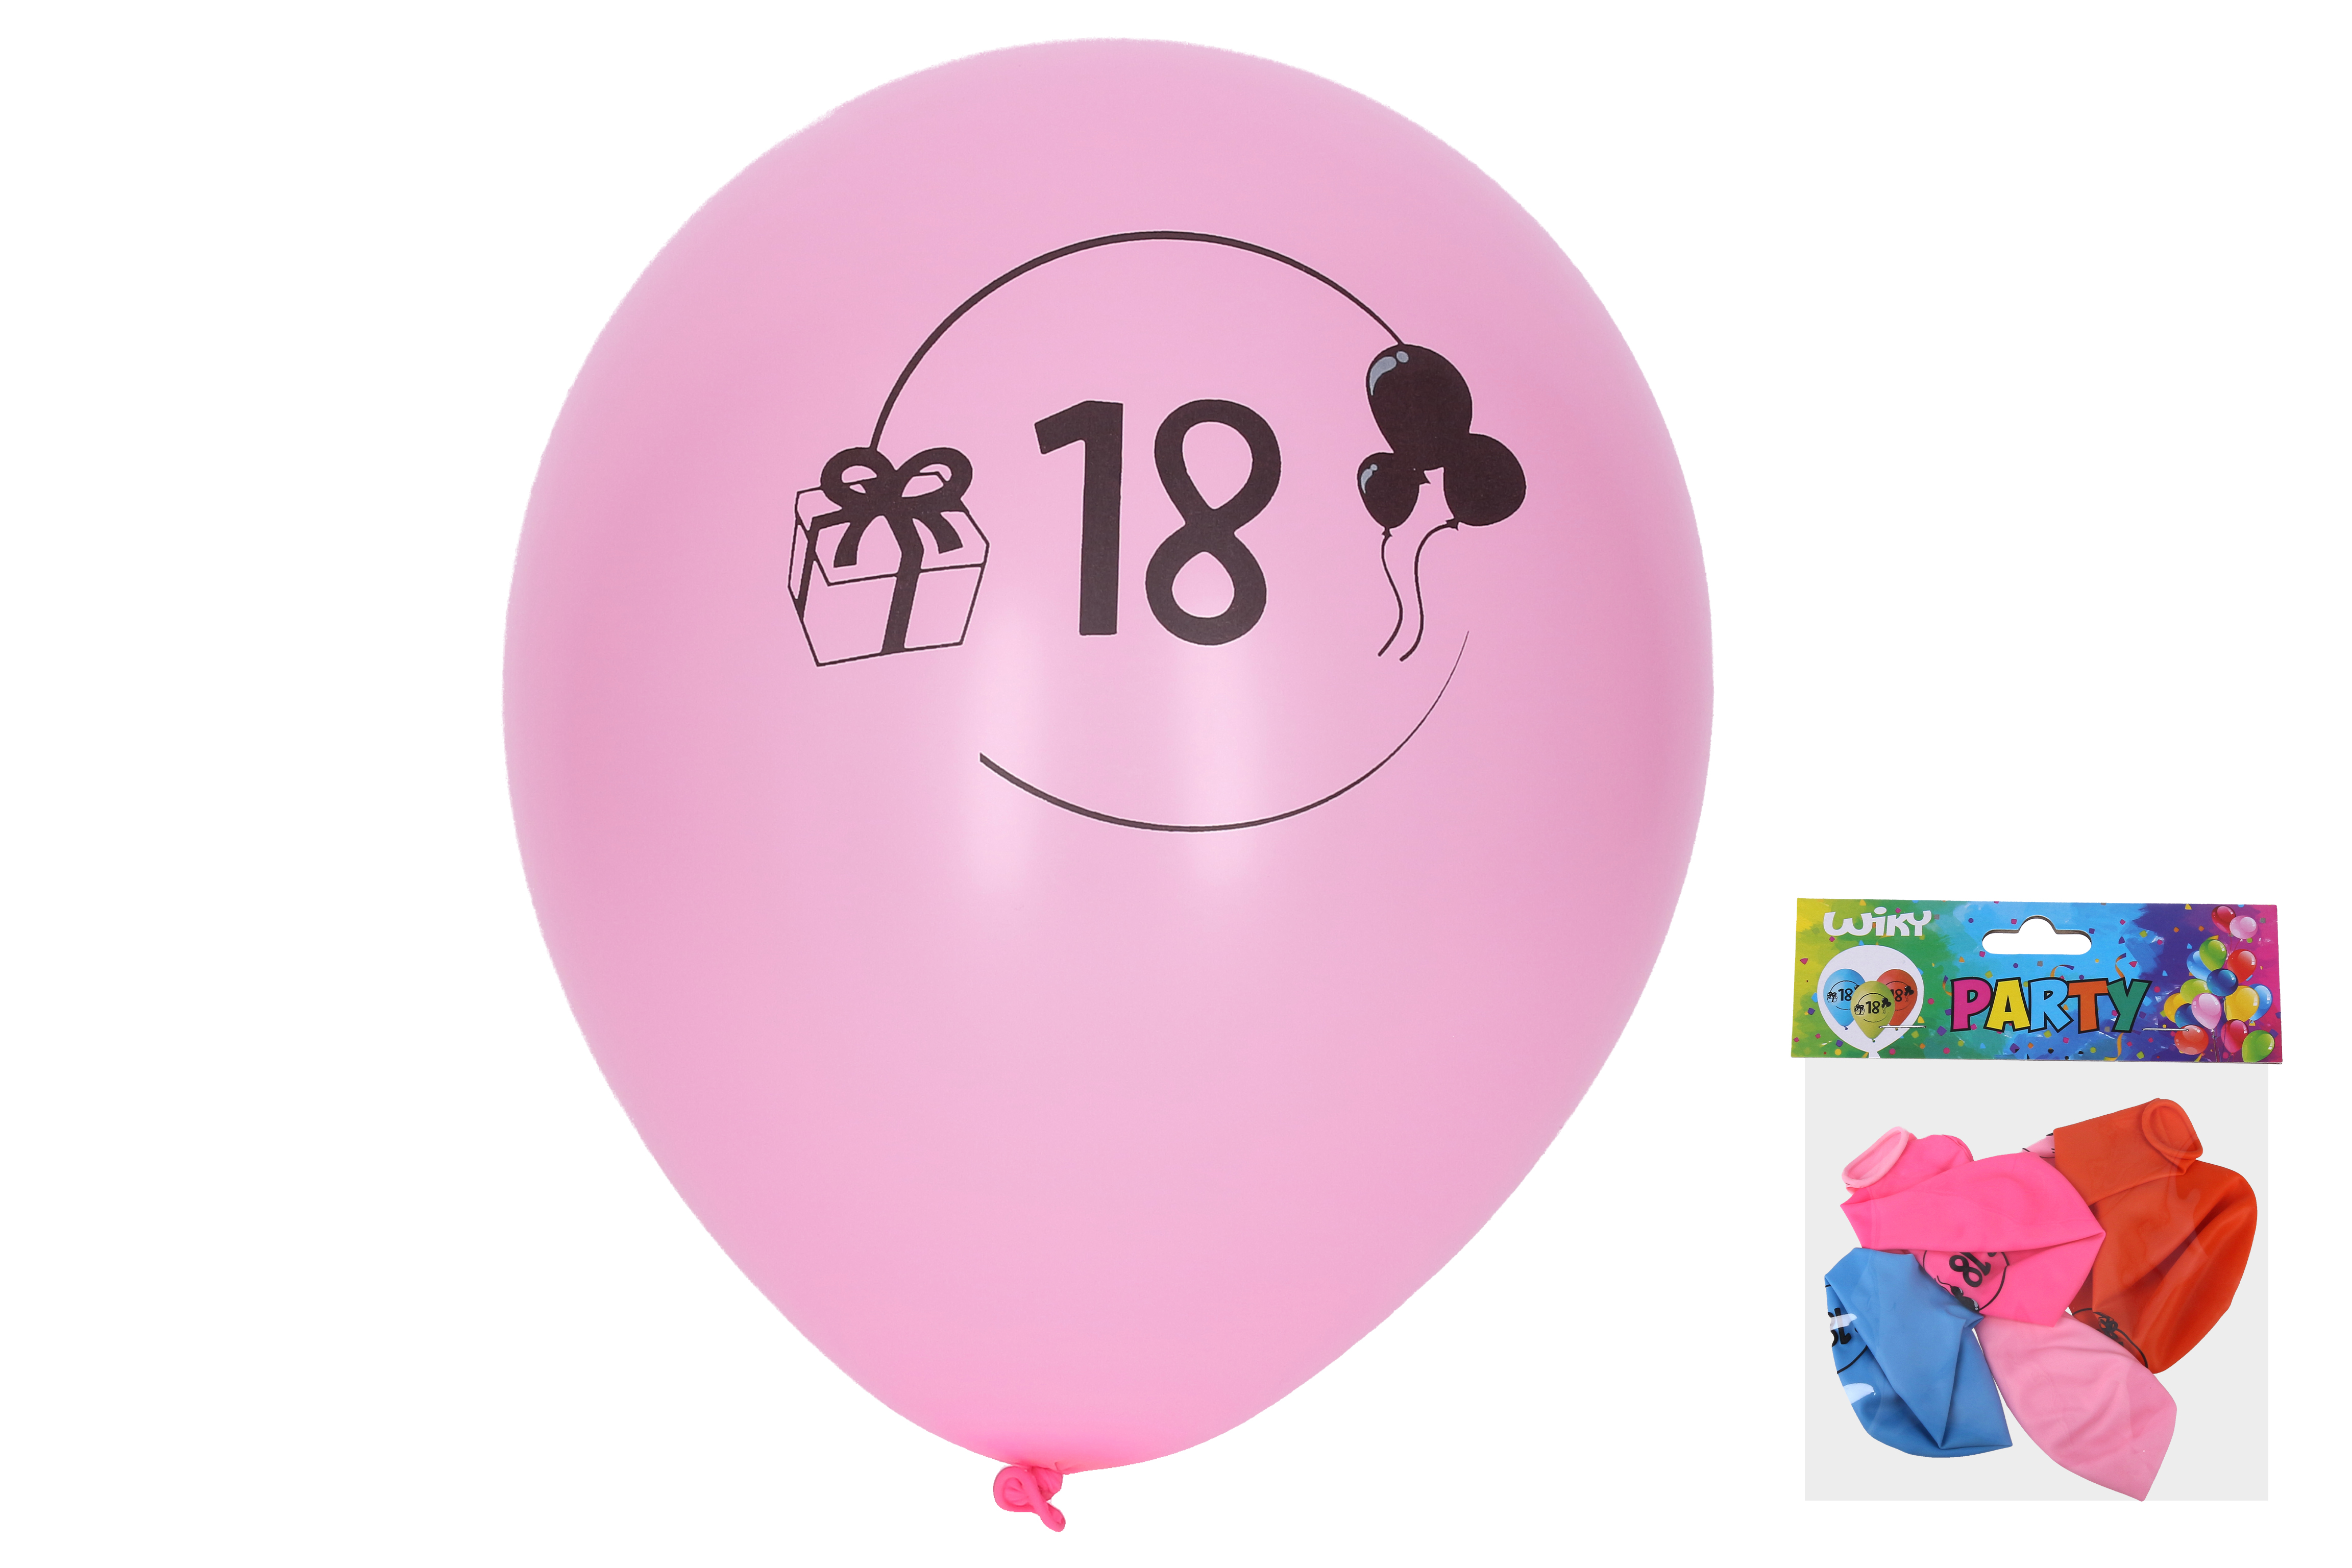 Balónek nafukovací 30 cm - sada 5ks, s číslem 18